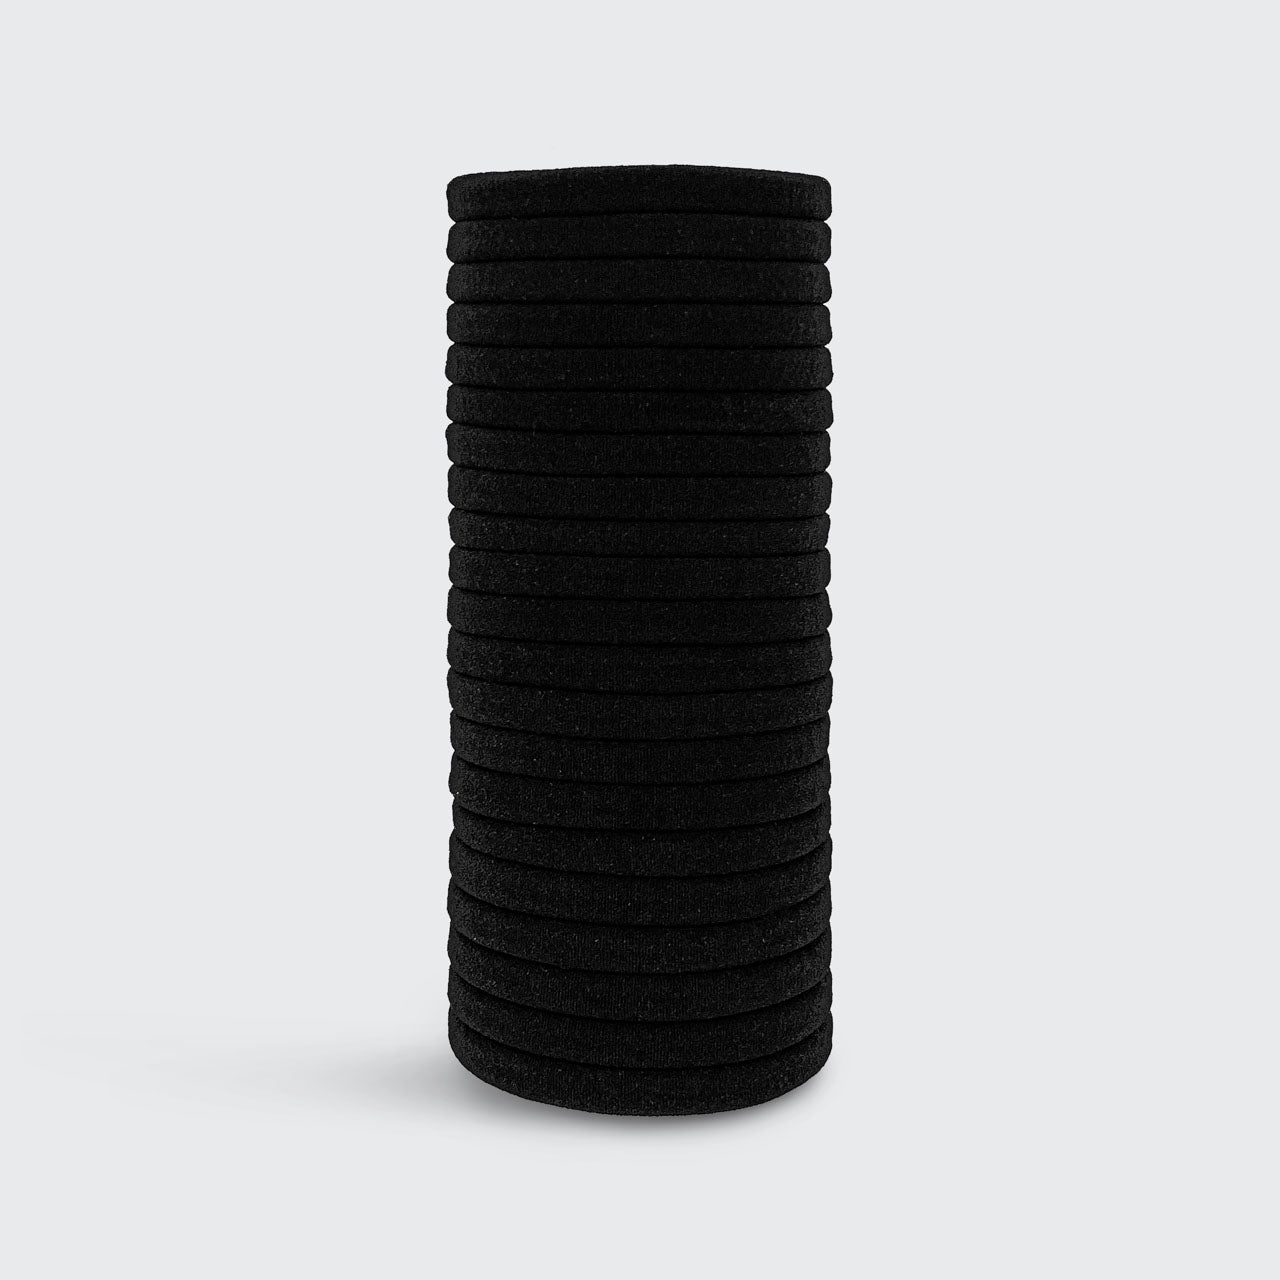 Black Nylon Elastics - 20 piece set